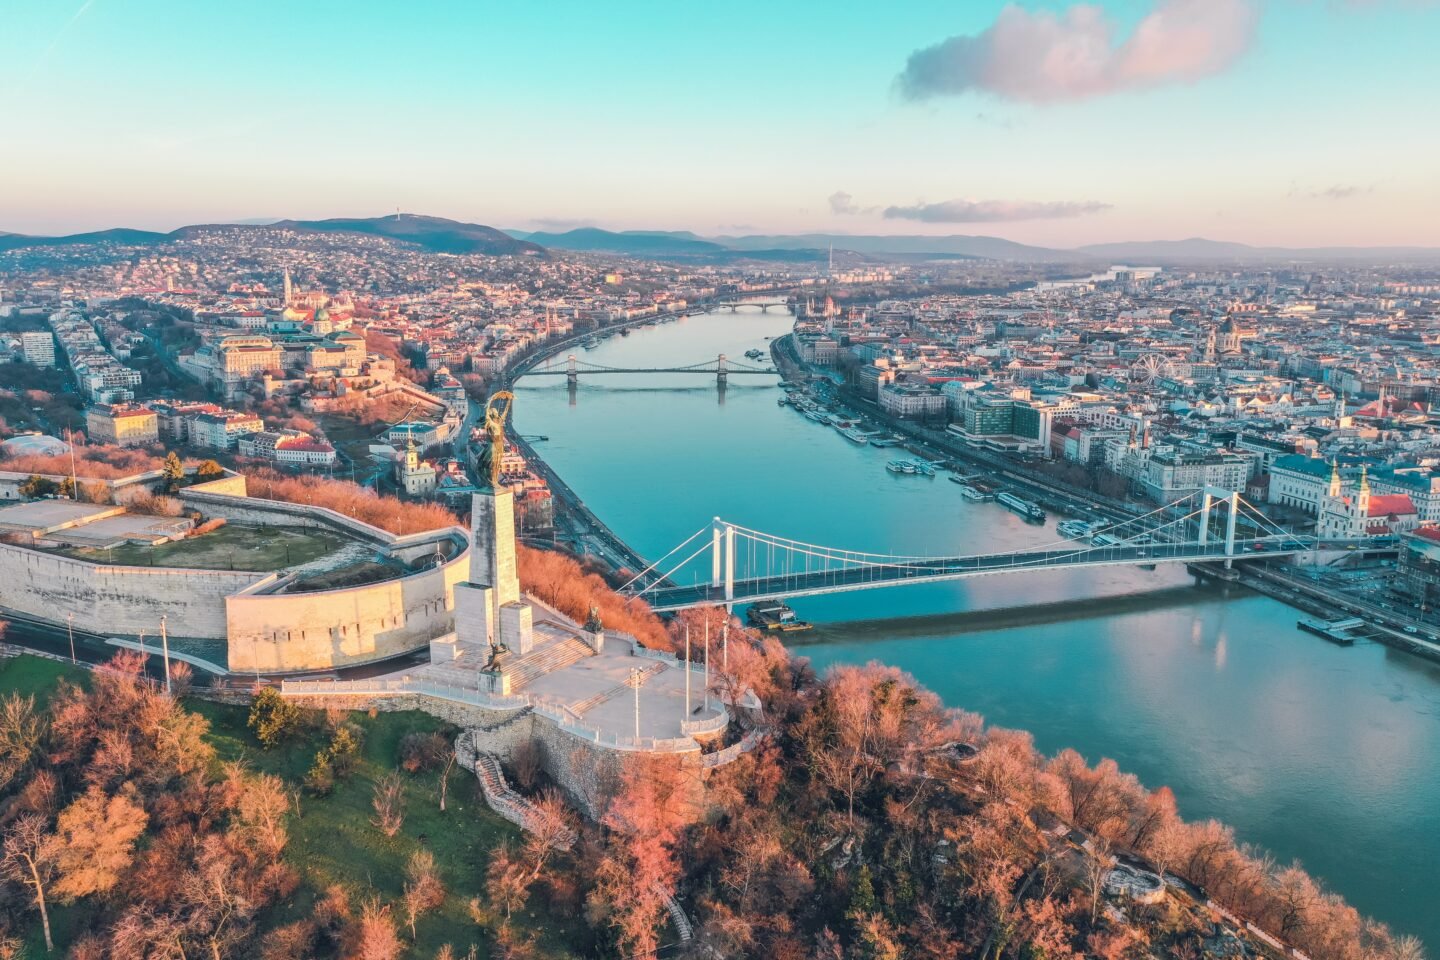 budapest from the sky, danube river- Budapest pride